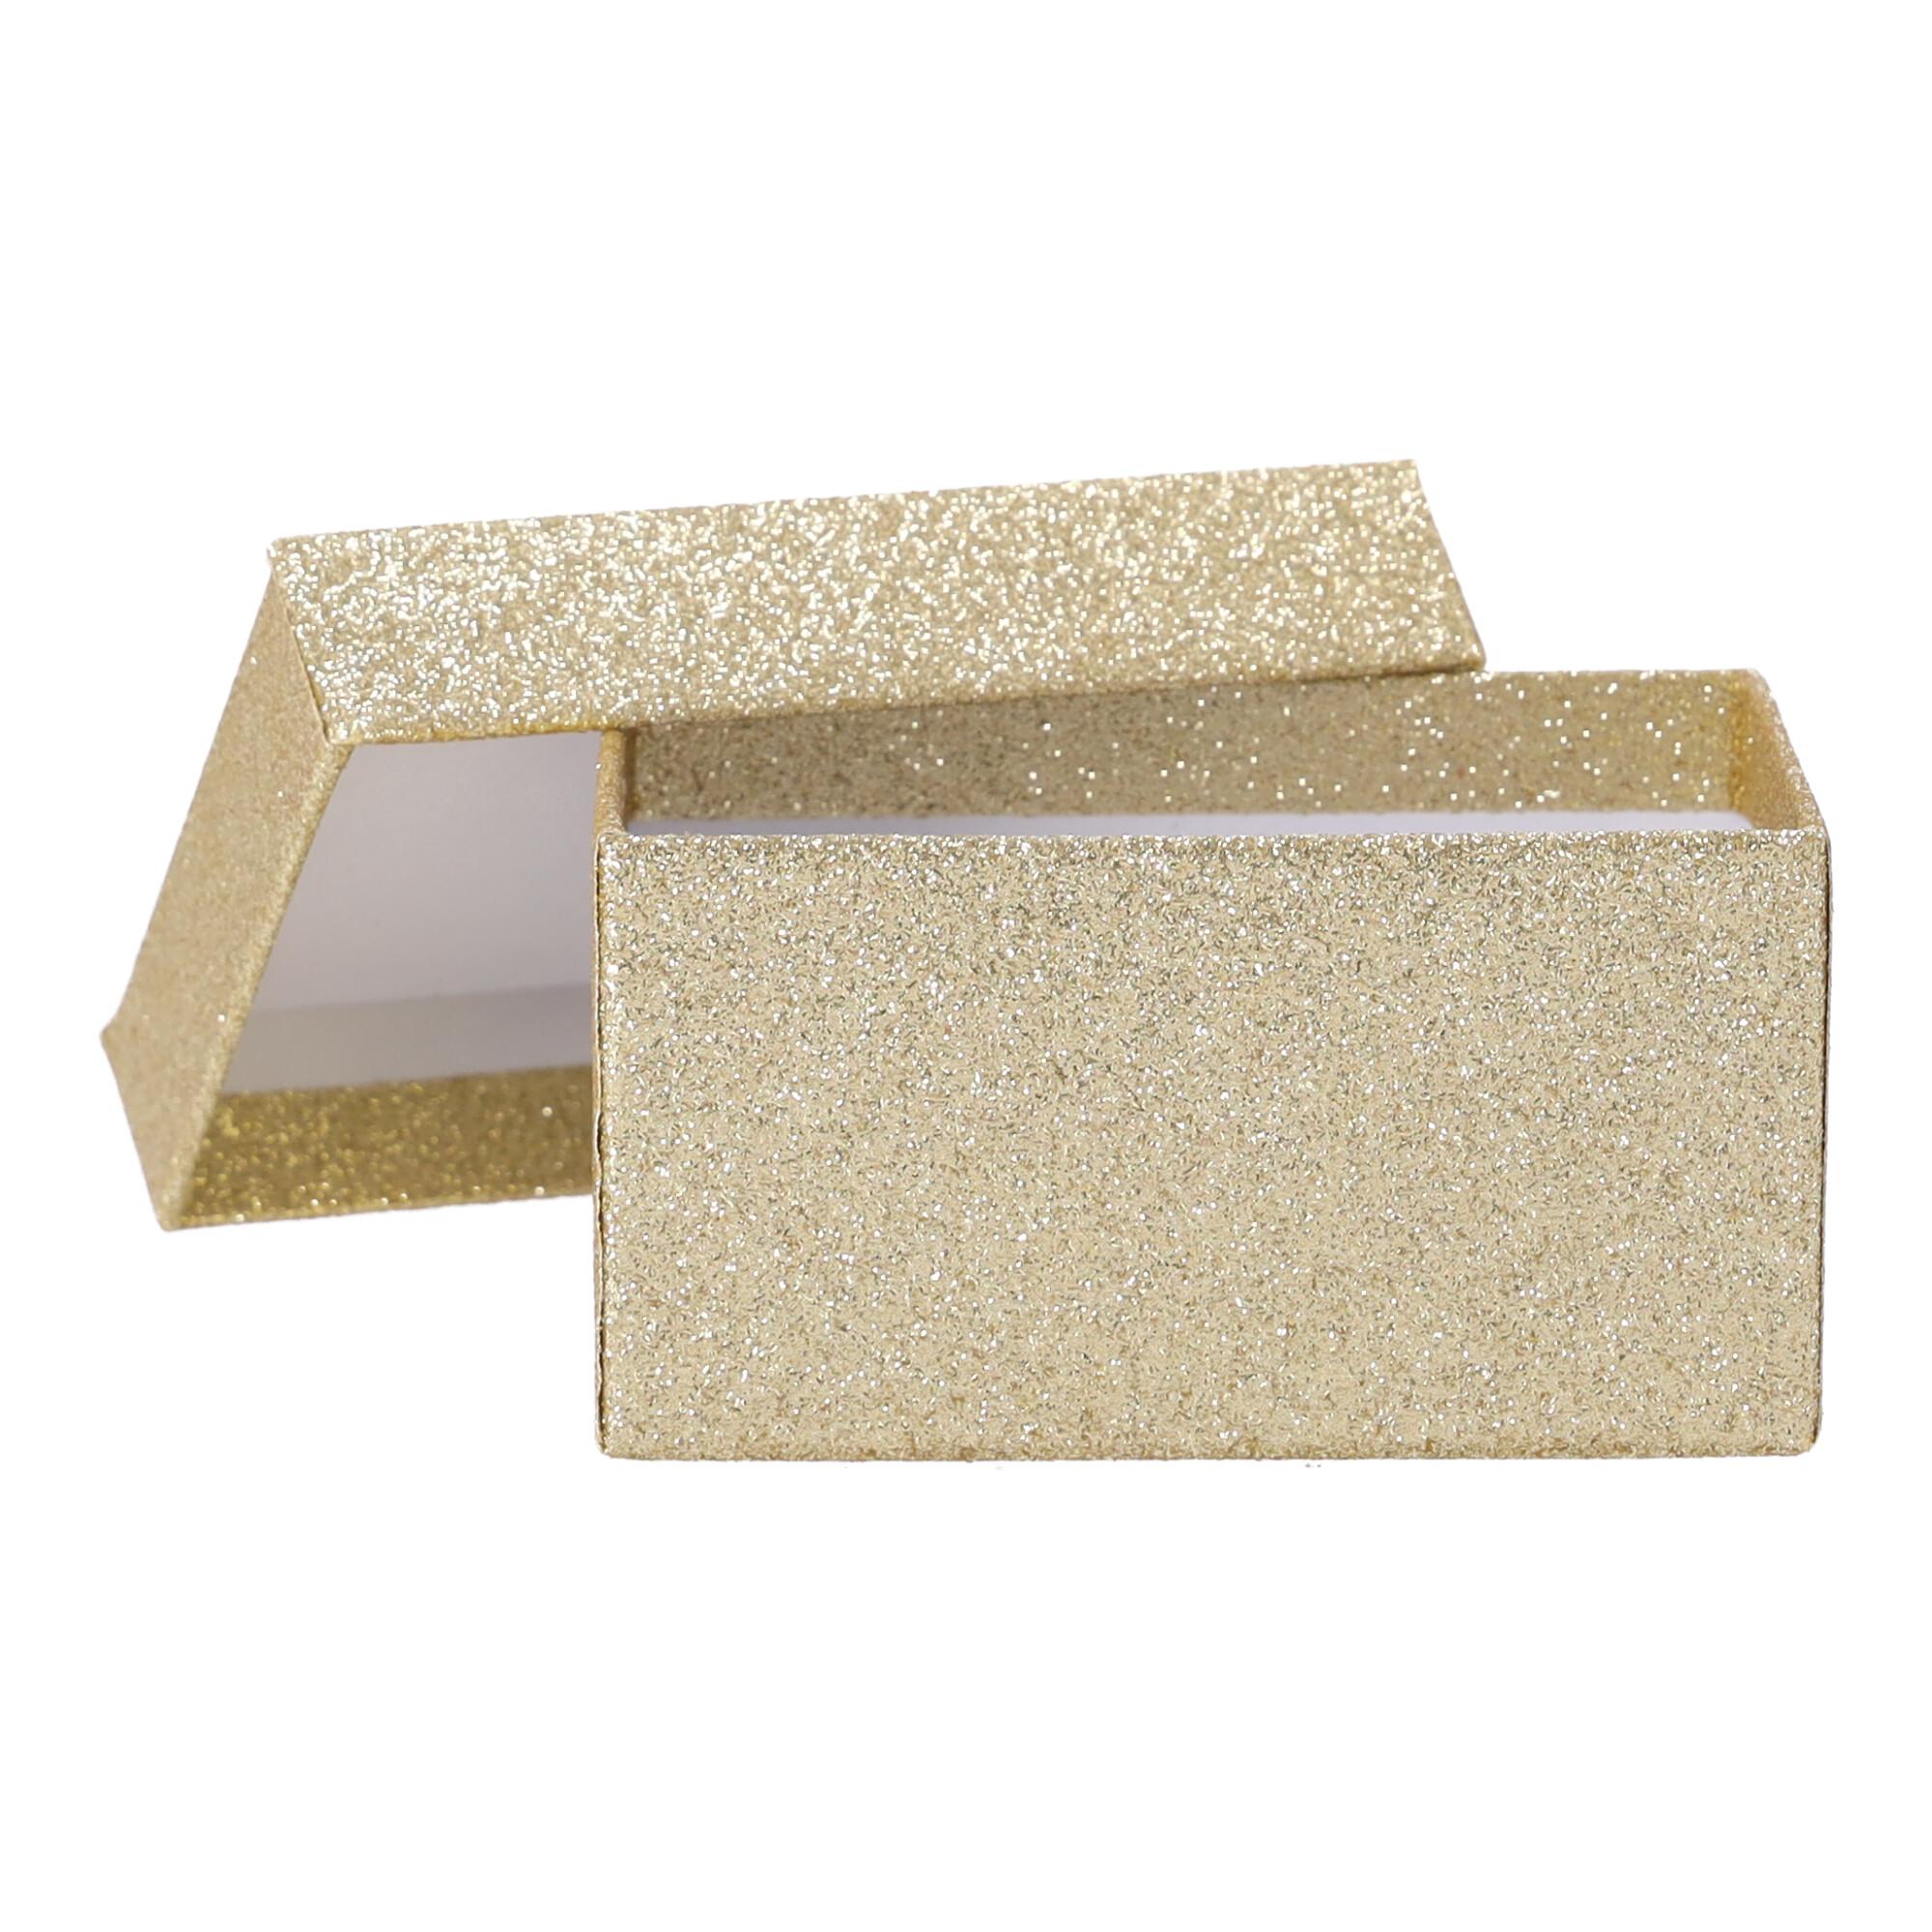 Small gift box 11x7.5x5.5 cm - Golden